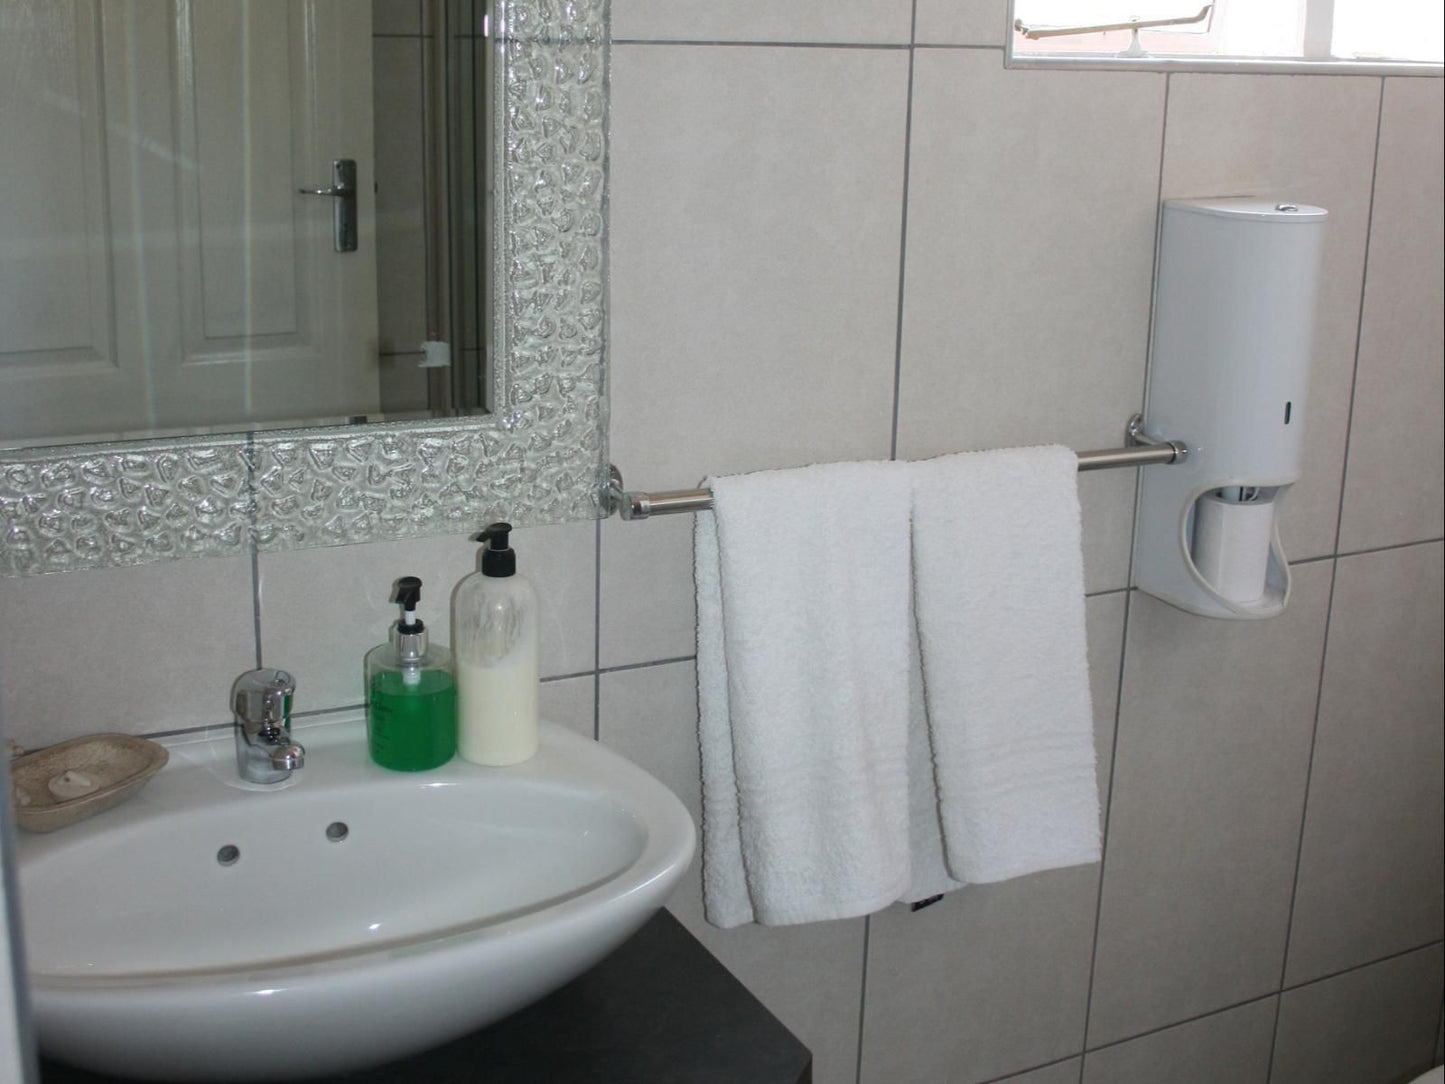 Nanda Guest House Garsfontein Pretoria Tshwane Gauteng South Africa Colorless, Bathroom